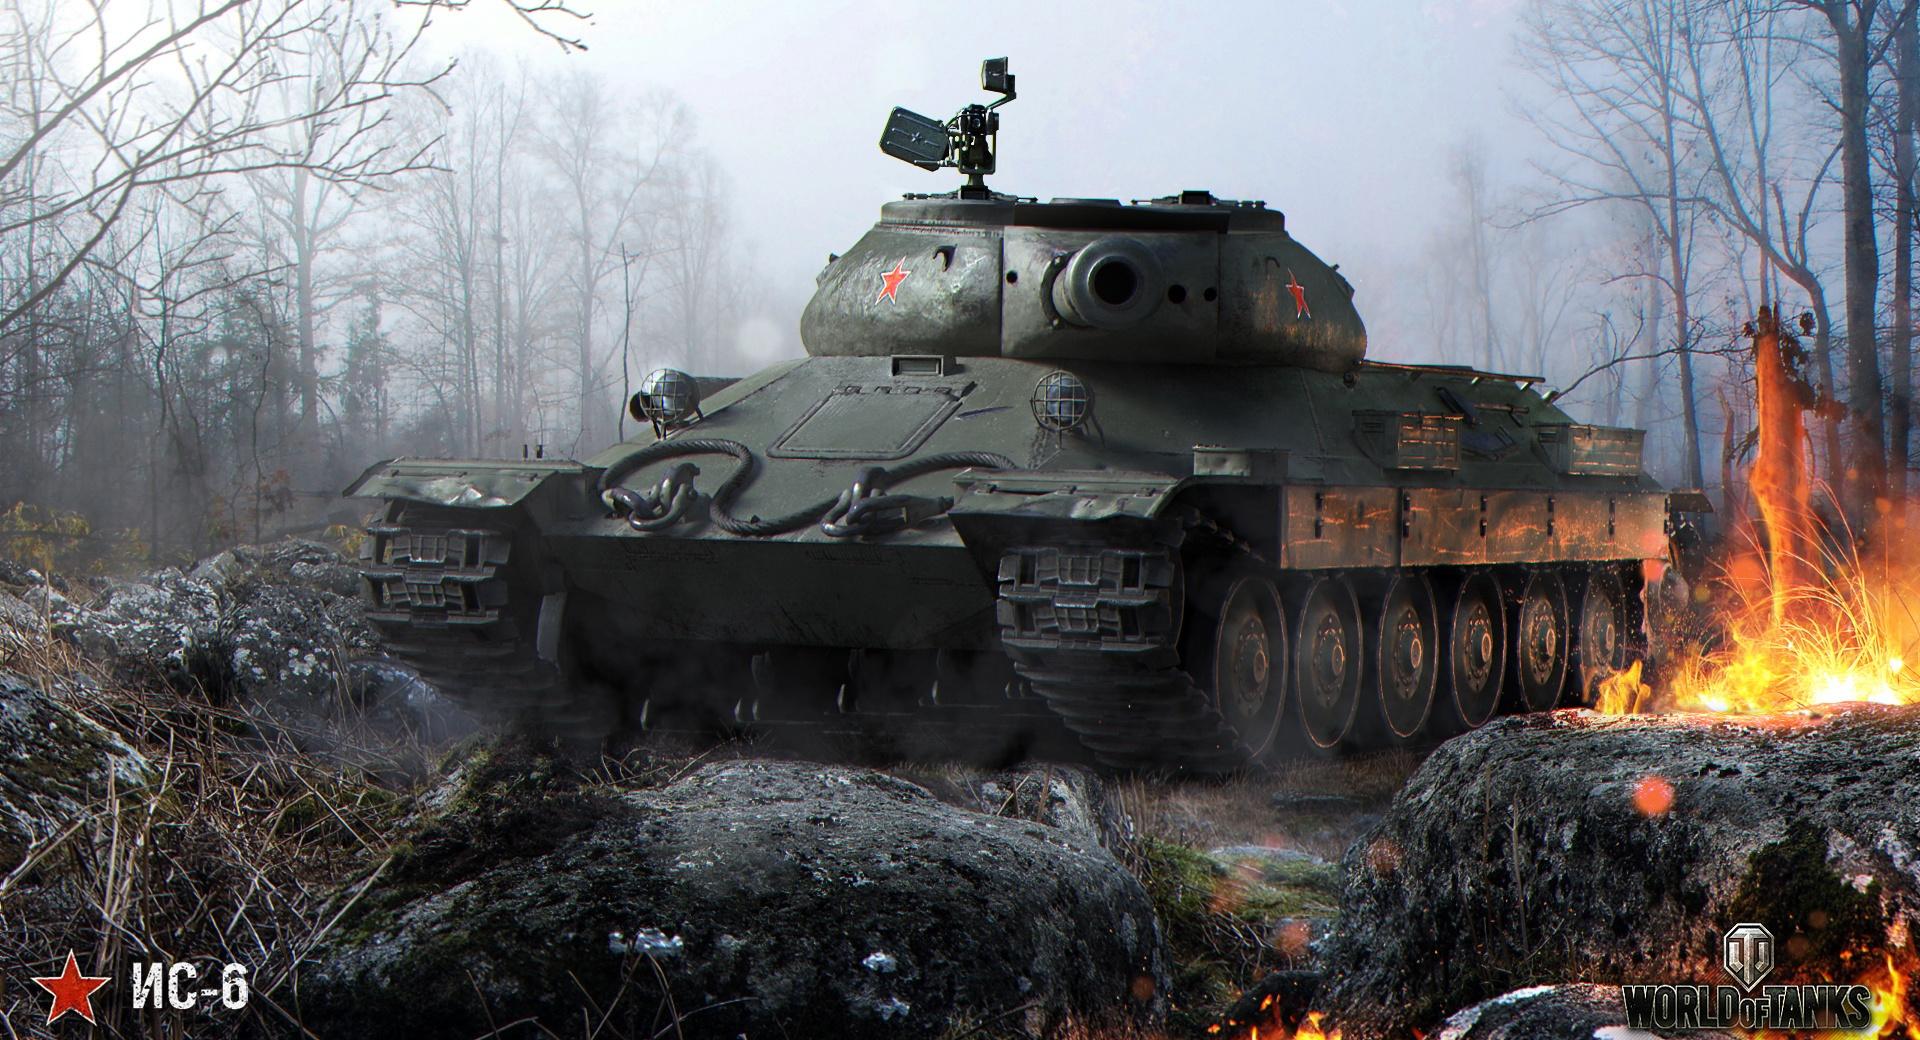 Russian Tank at 1024 x 1024 iPad size wallpapers HD quality